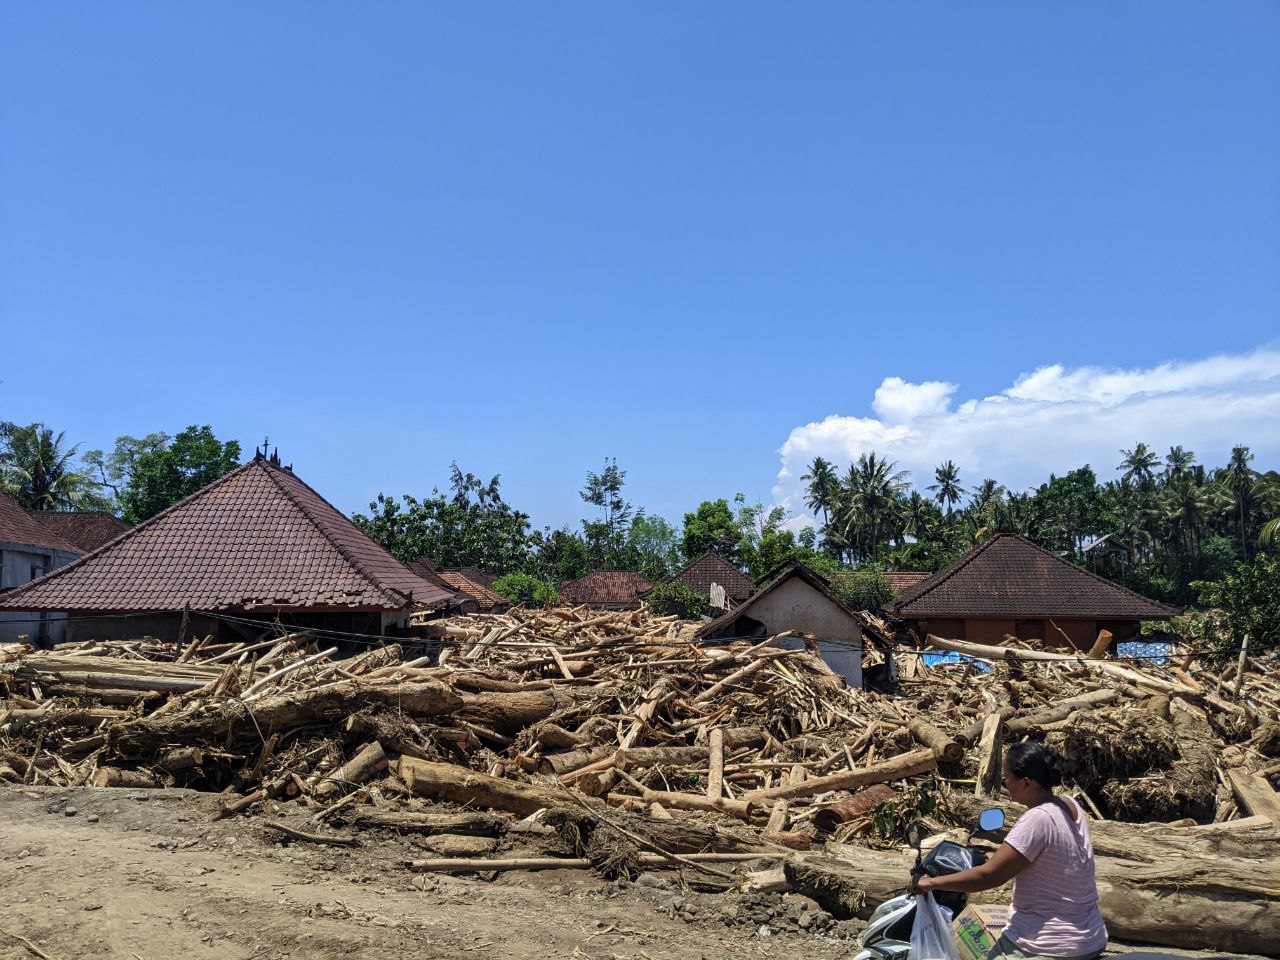 Rumah tertimbun kayu dari banjar bandang di Jembrana, 17 Okt 2022. Foto : Luh De Suriyani/Mongabay Indonesia